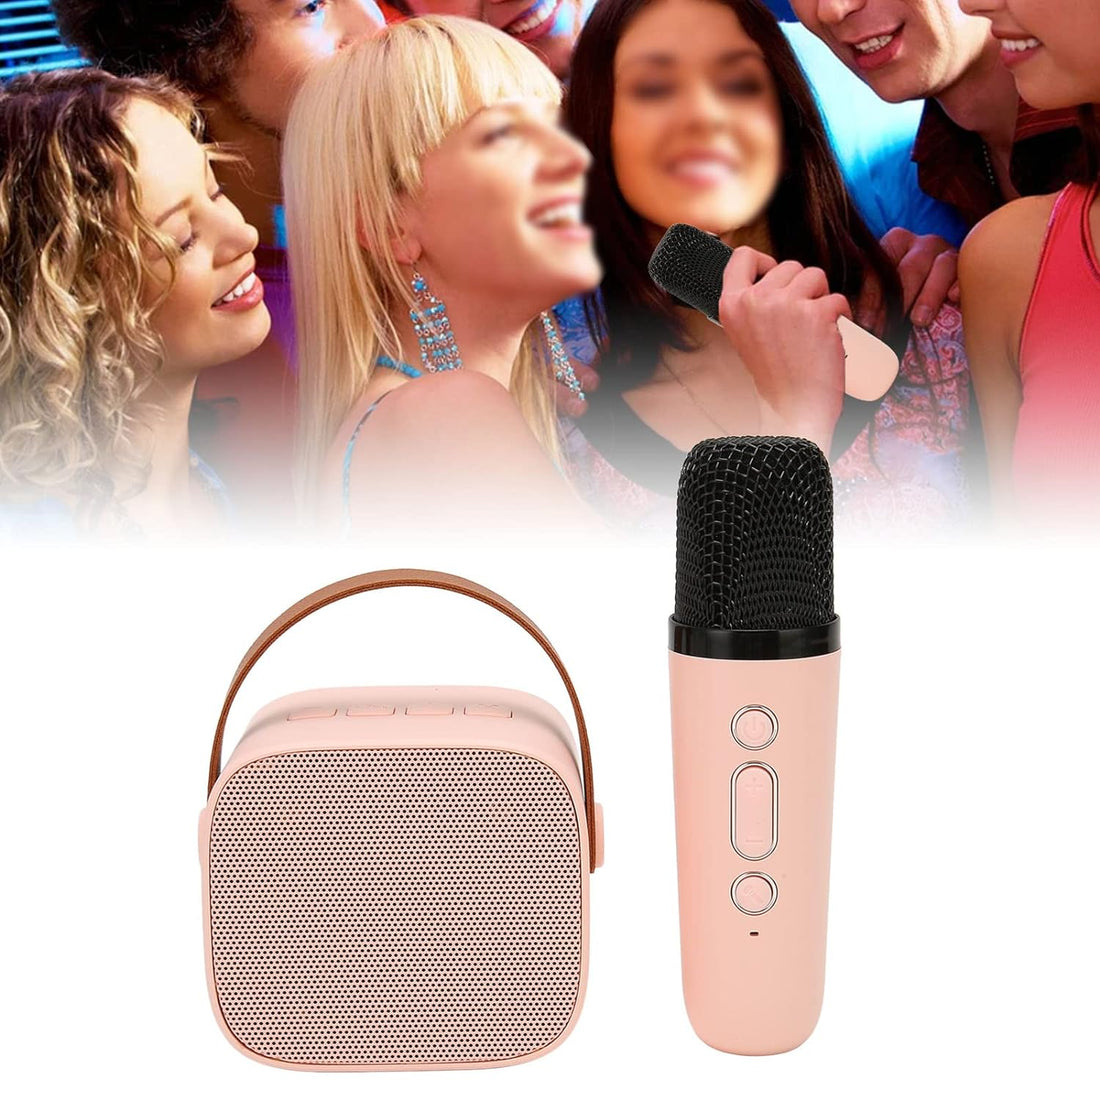 Pyhodi Portable Karaoke Machine with Wireless Microphone, Rechargeable, Retro, HD, Stereo, Mini Karaoke Machine Set, Handheld Karaoke Microphones, Speaker Machine for (Pink)